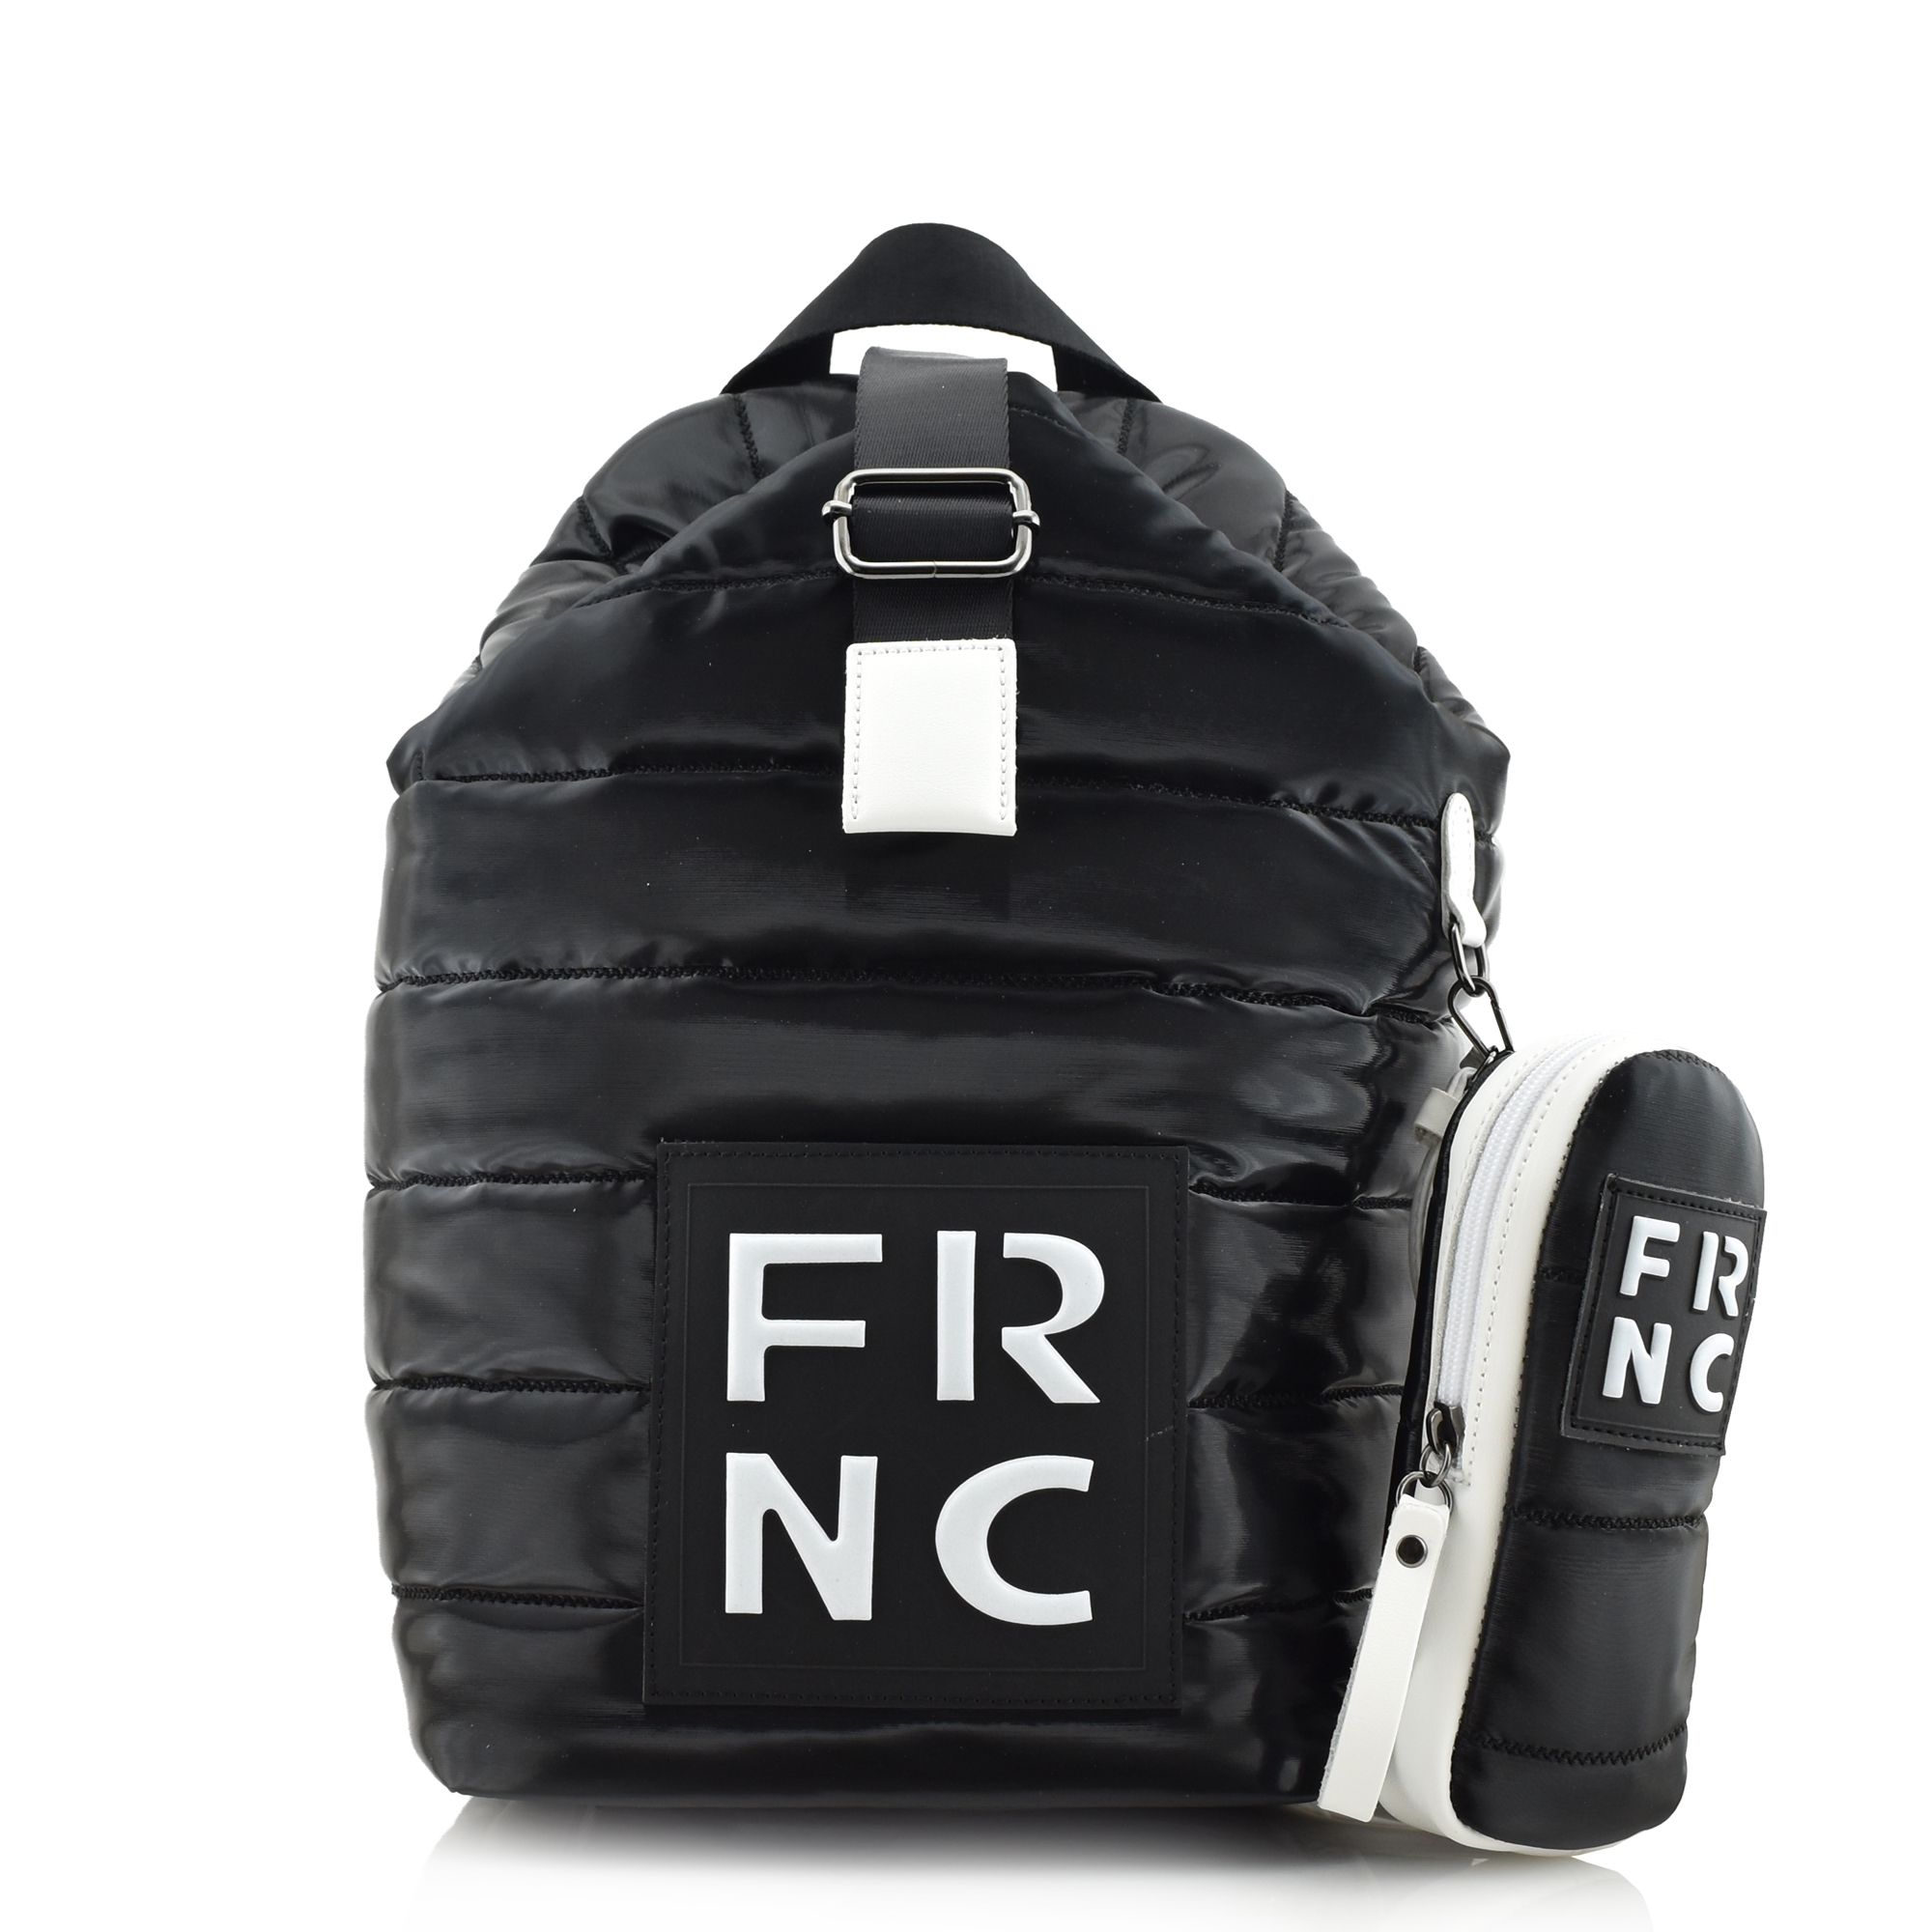 FRNC - FRANCESCO POUCH SHINY BACKPACK - 2301 BLACK